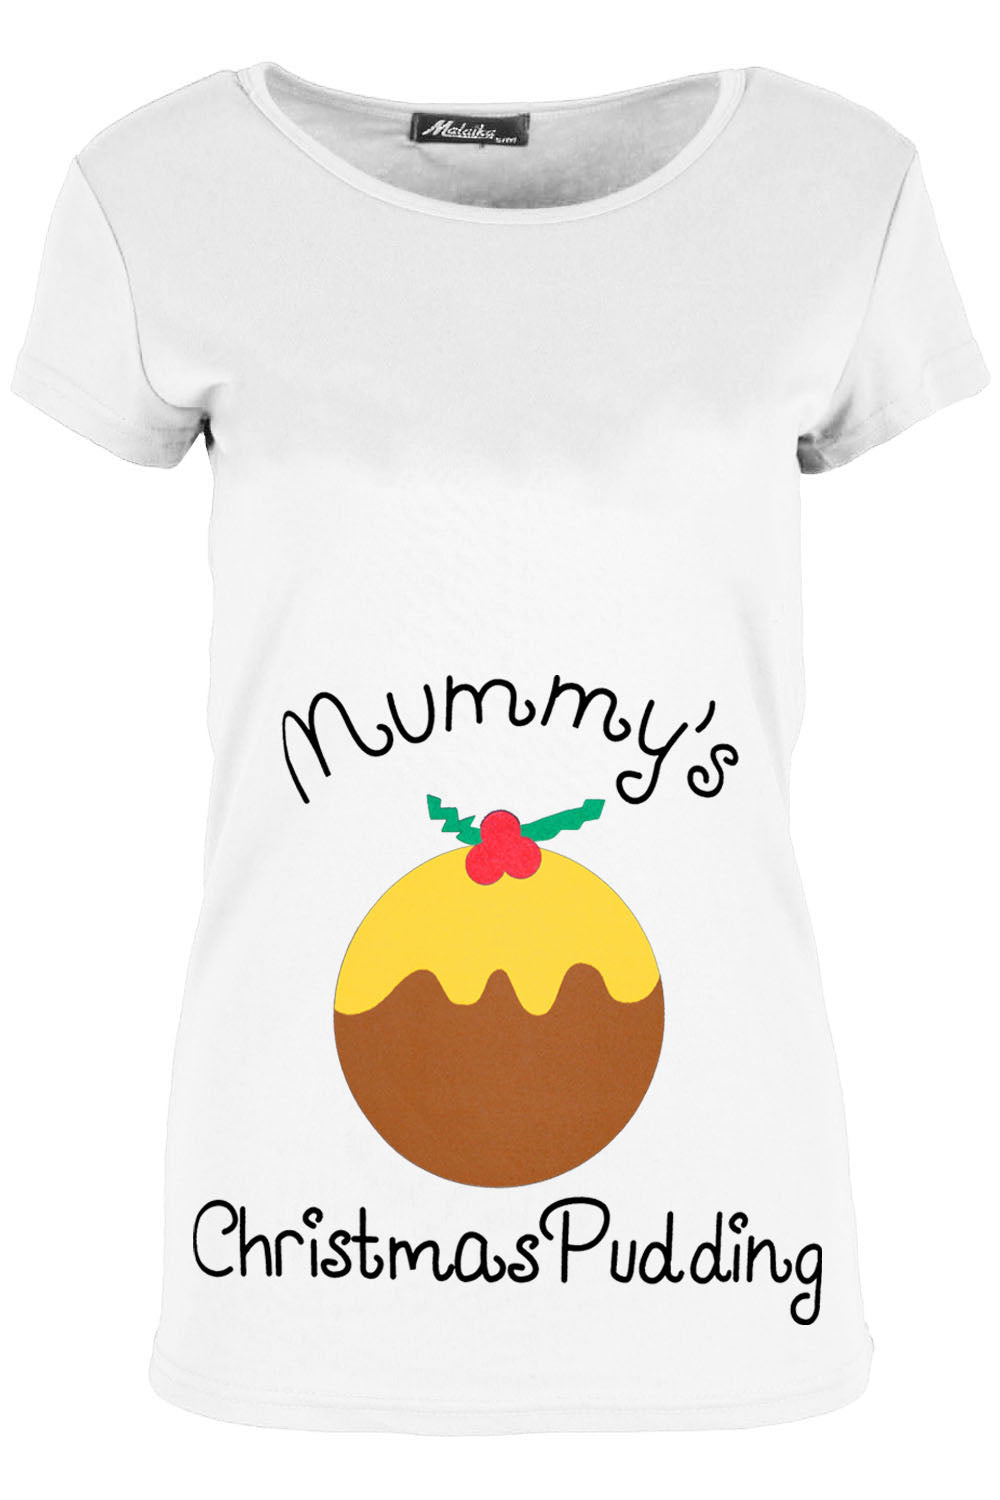 Mummys Christmas Pudding Maternity Tshirt - bejealous-com